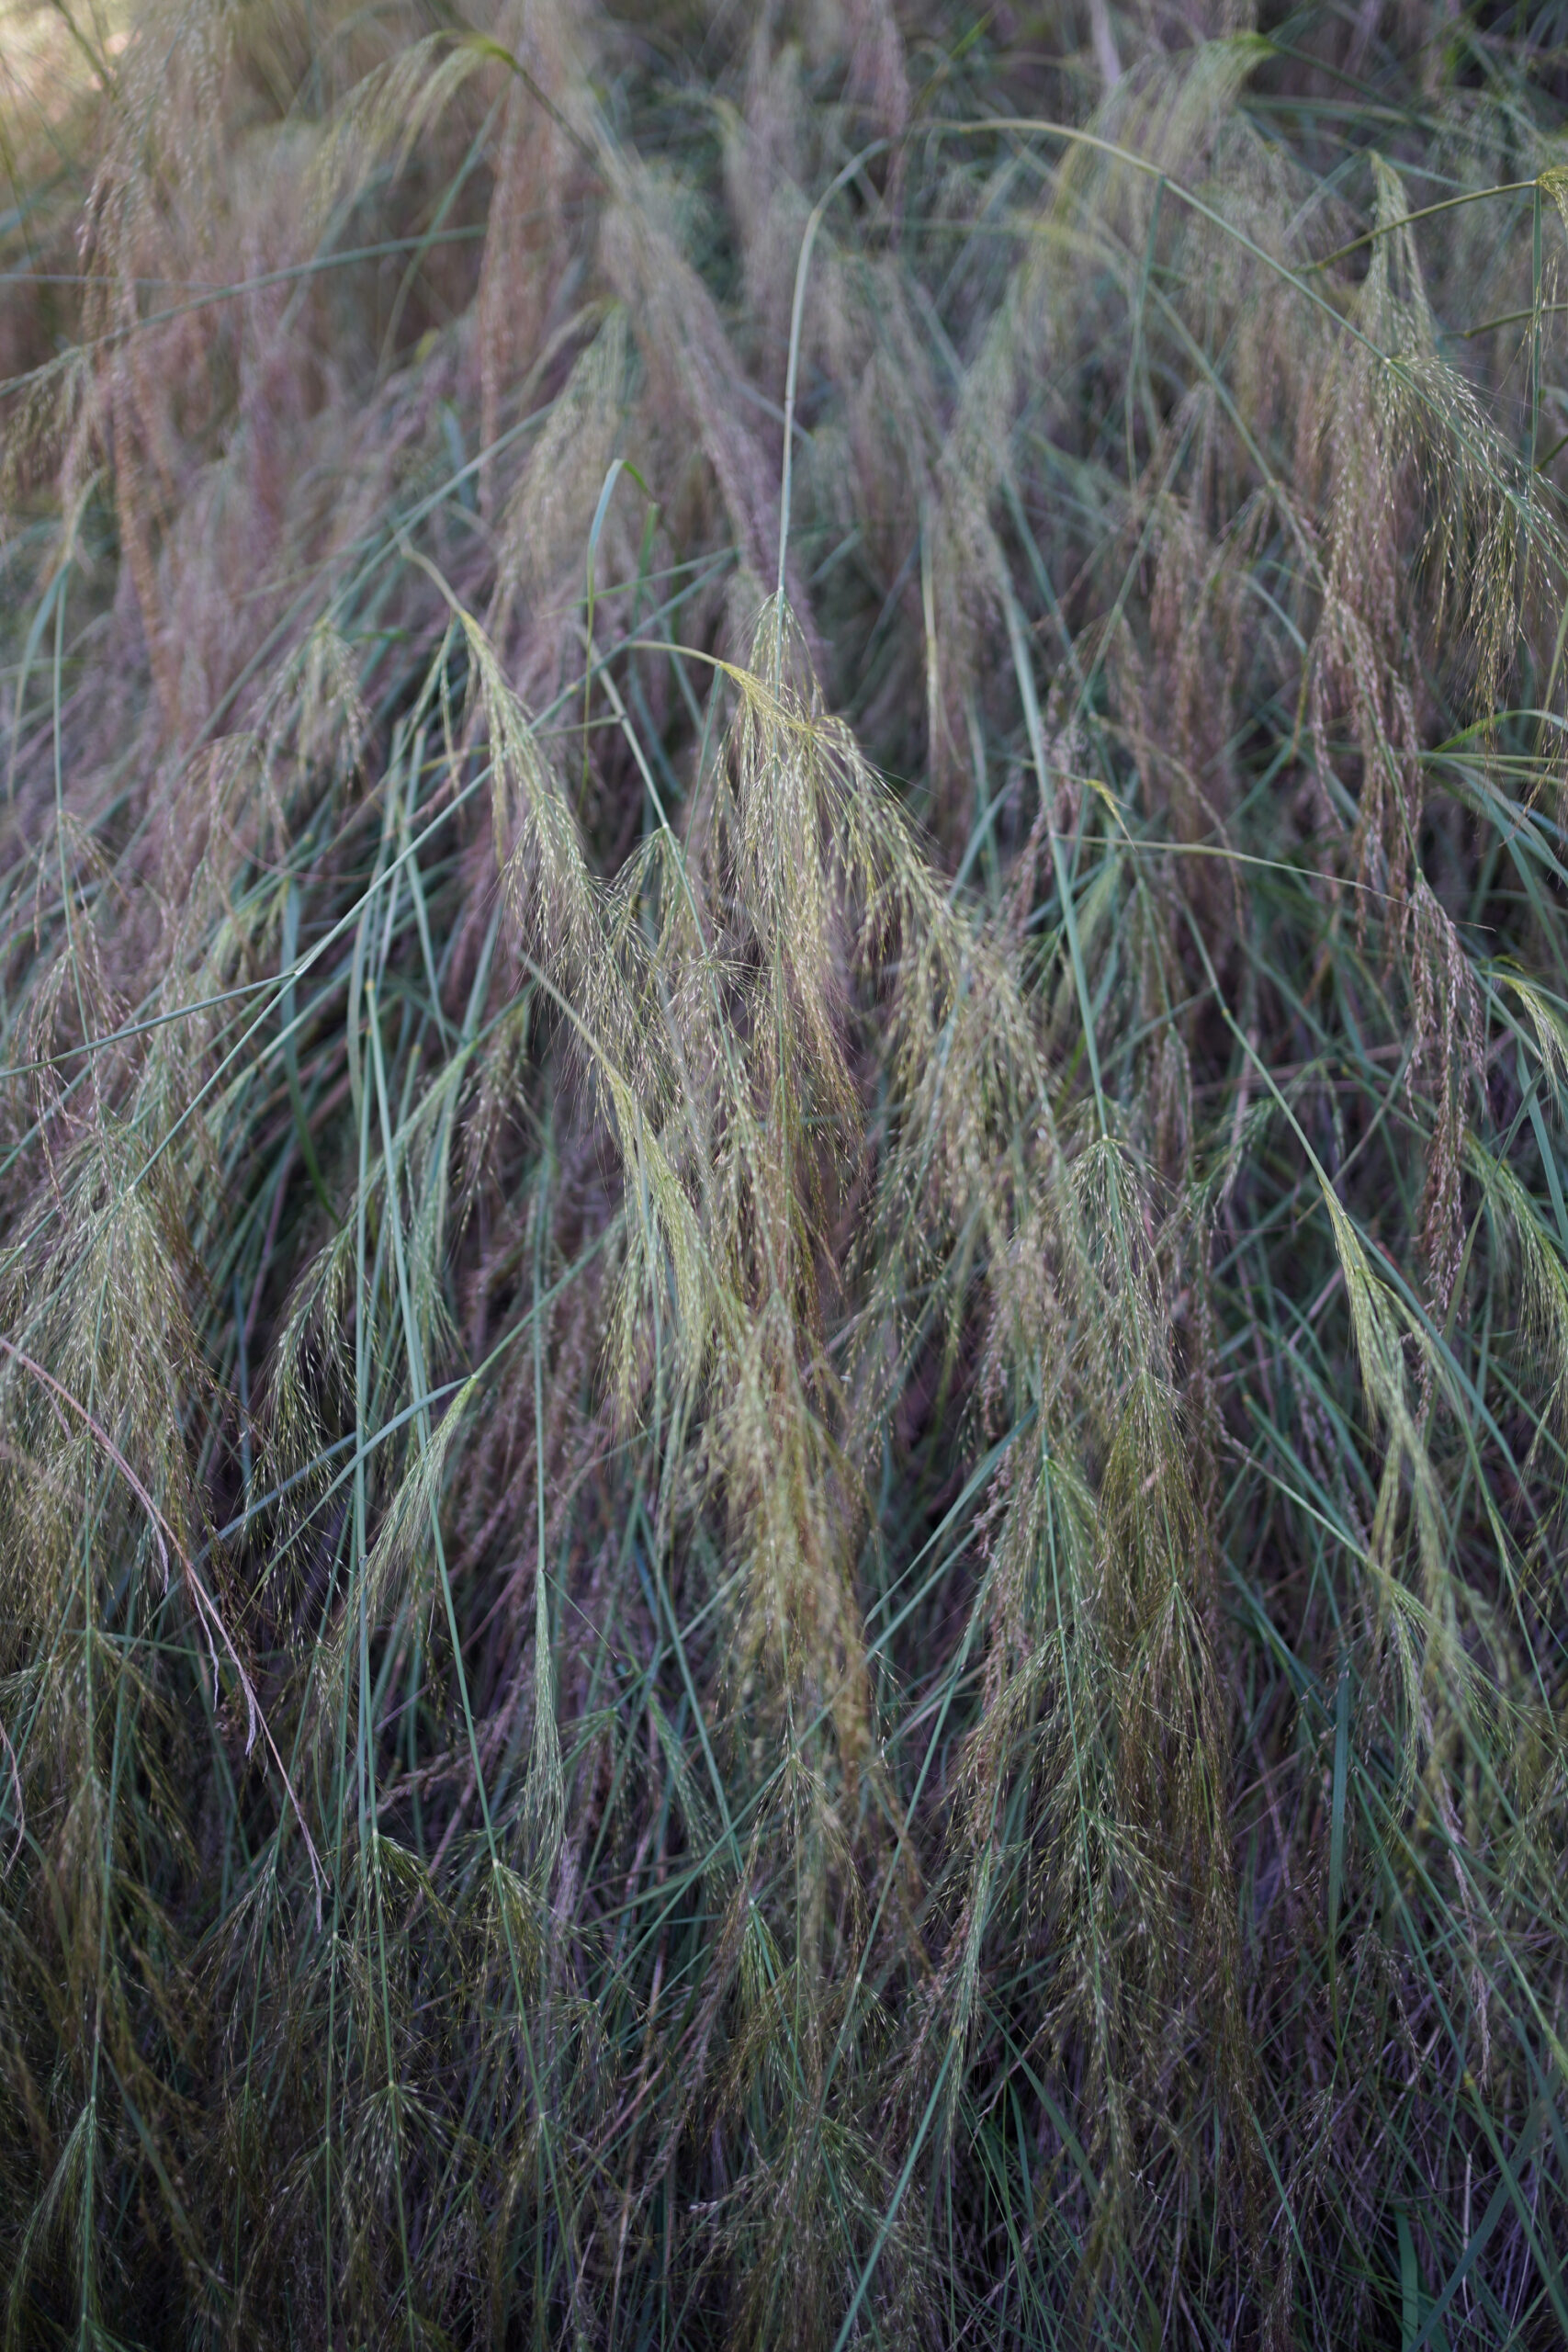 Another striking Australian Ornamental Grass: Austrostipa verticillata